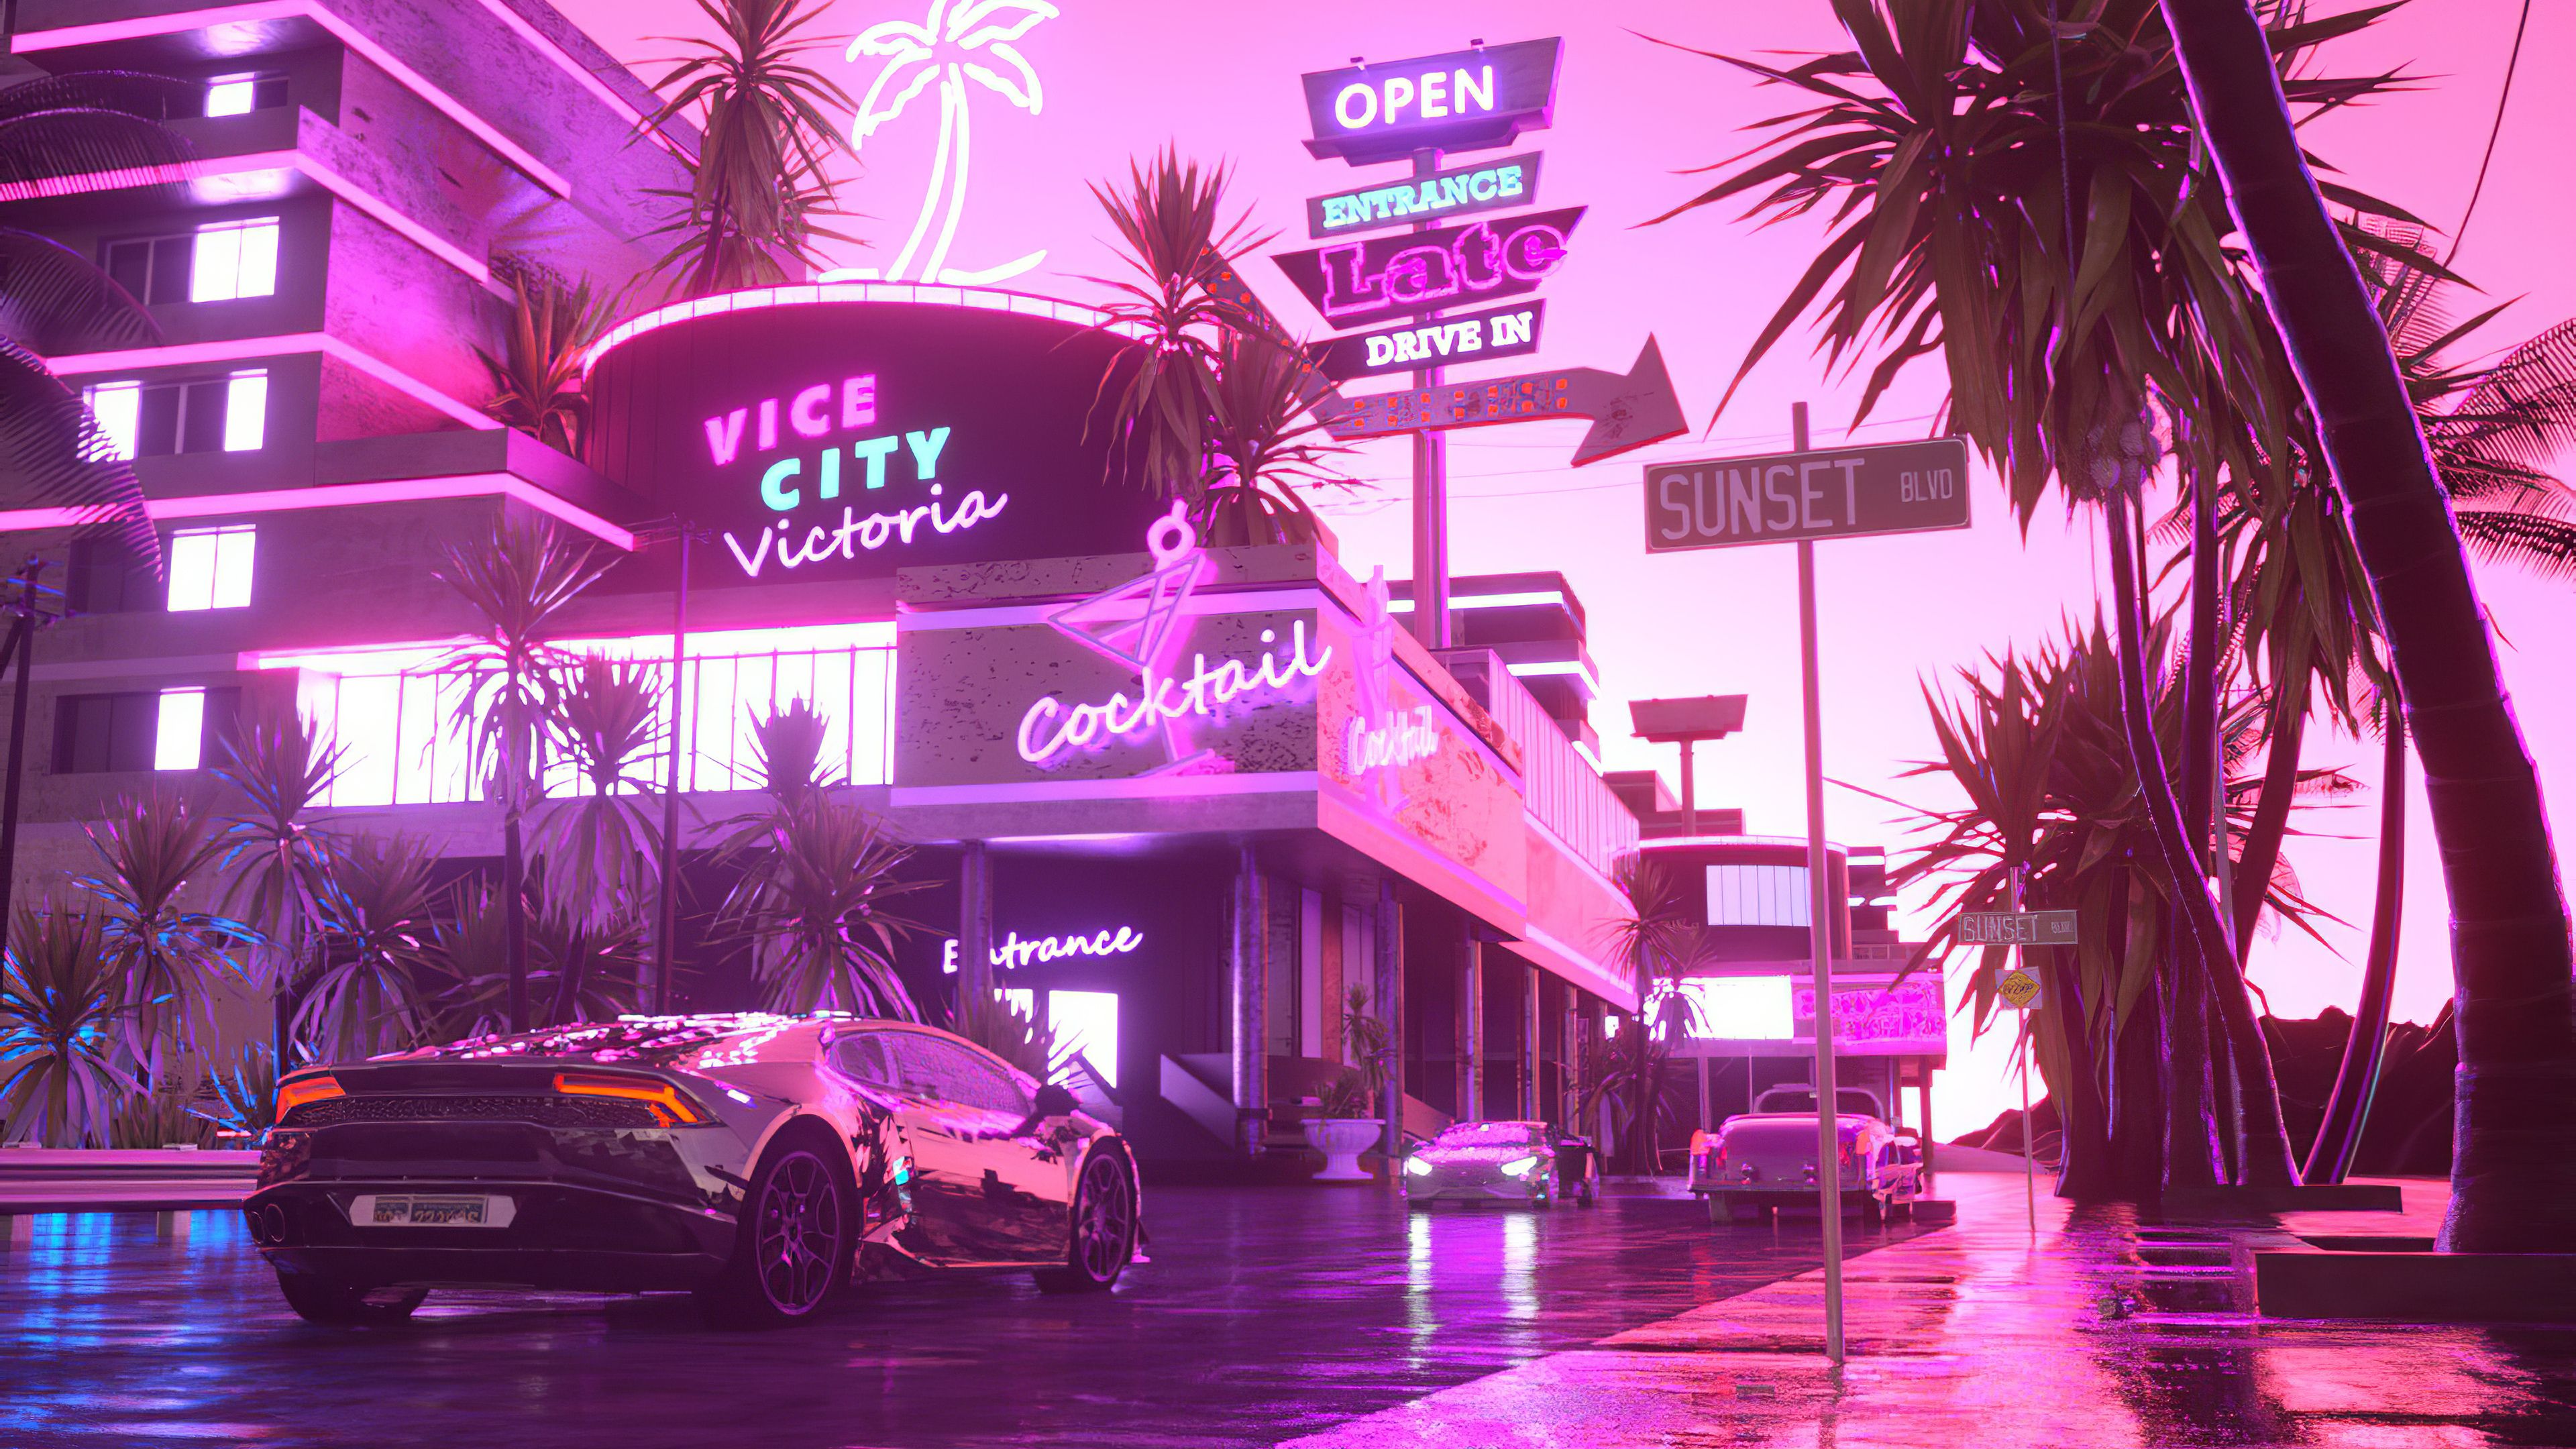 Lamborghini Victoria In Pink City 4k, HD Artist, 4k Wallpaper, Image, Background, Photo and Picture